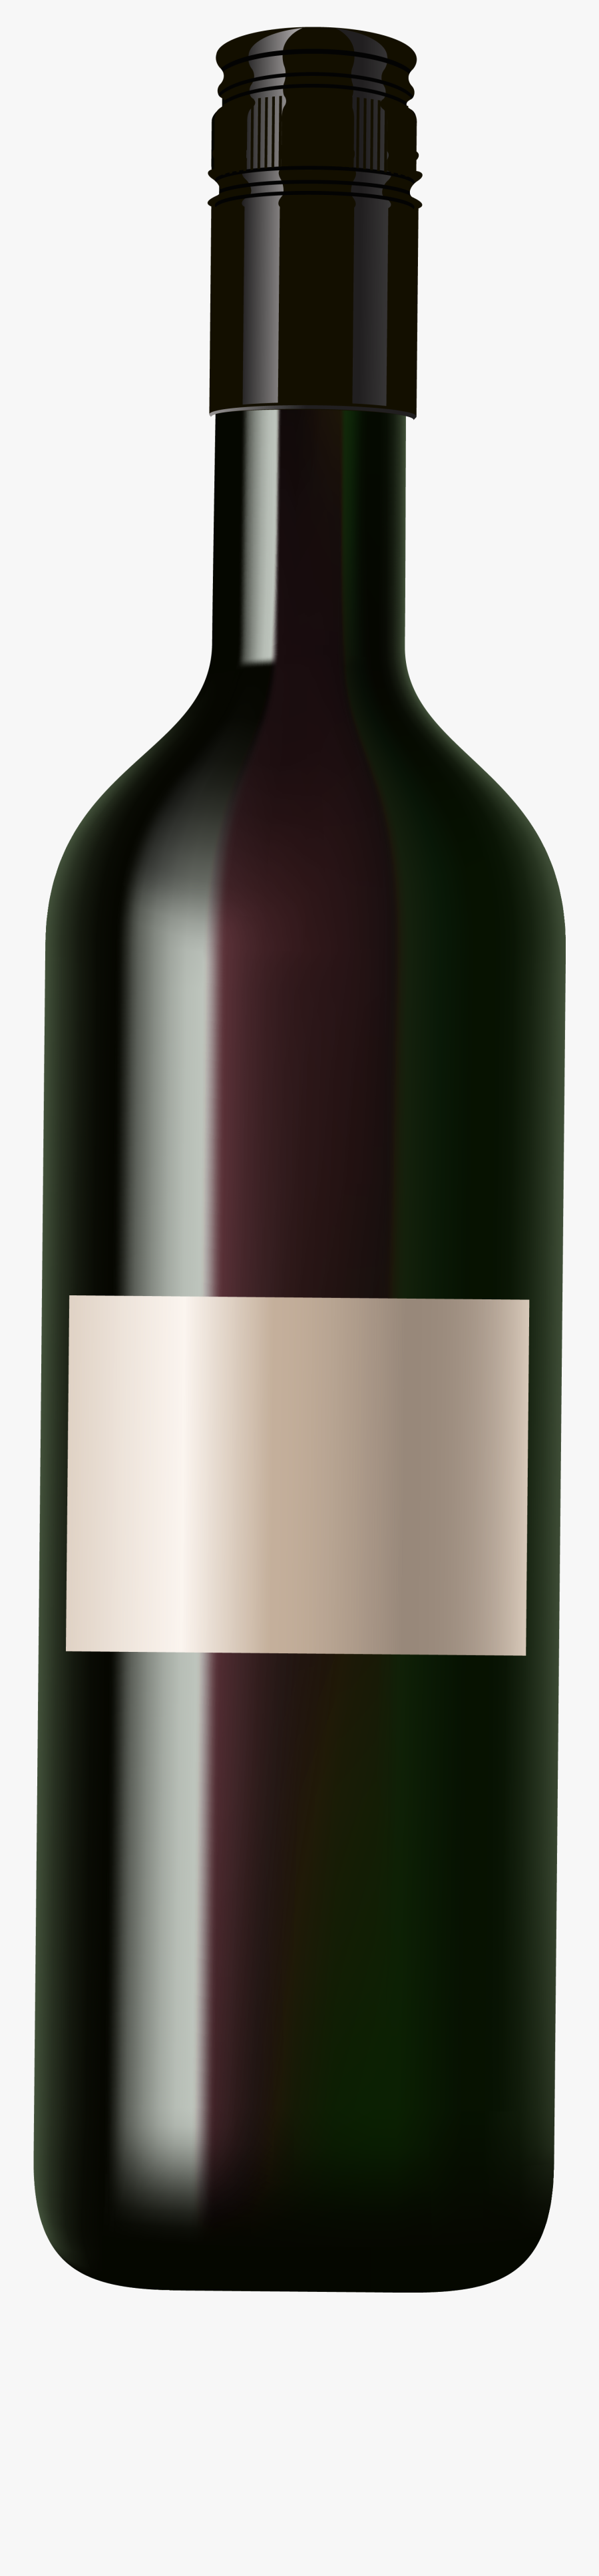 Empty Wine Bottle Png Download - Wine Bottle Png Transparent, Transparent Clipart